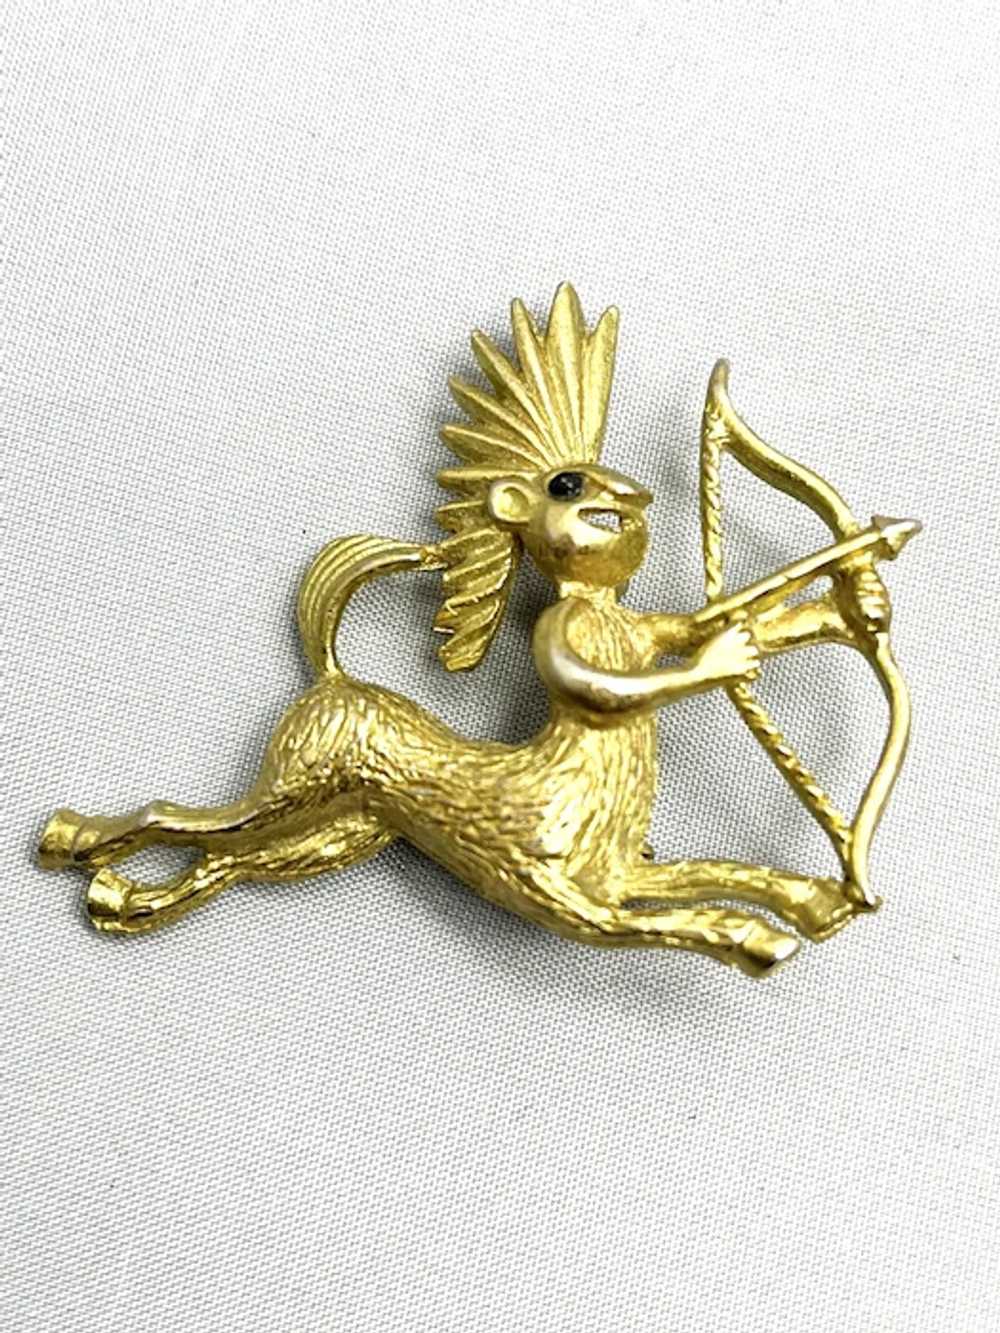 Vintage Centaur Half Man Half Horse Brooch Pin - image 3